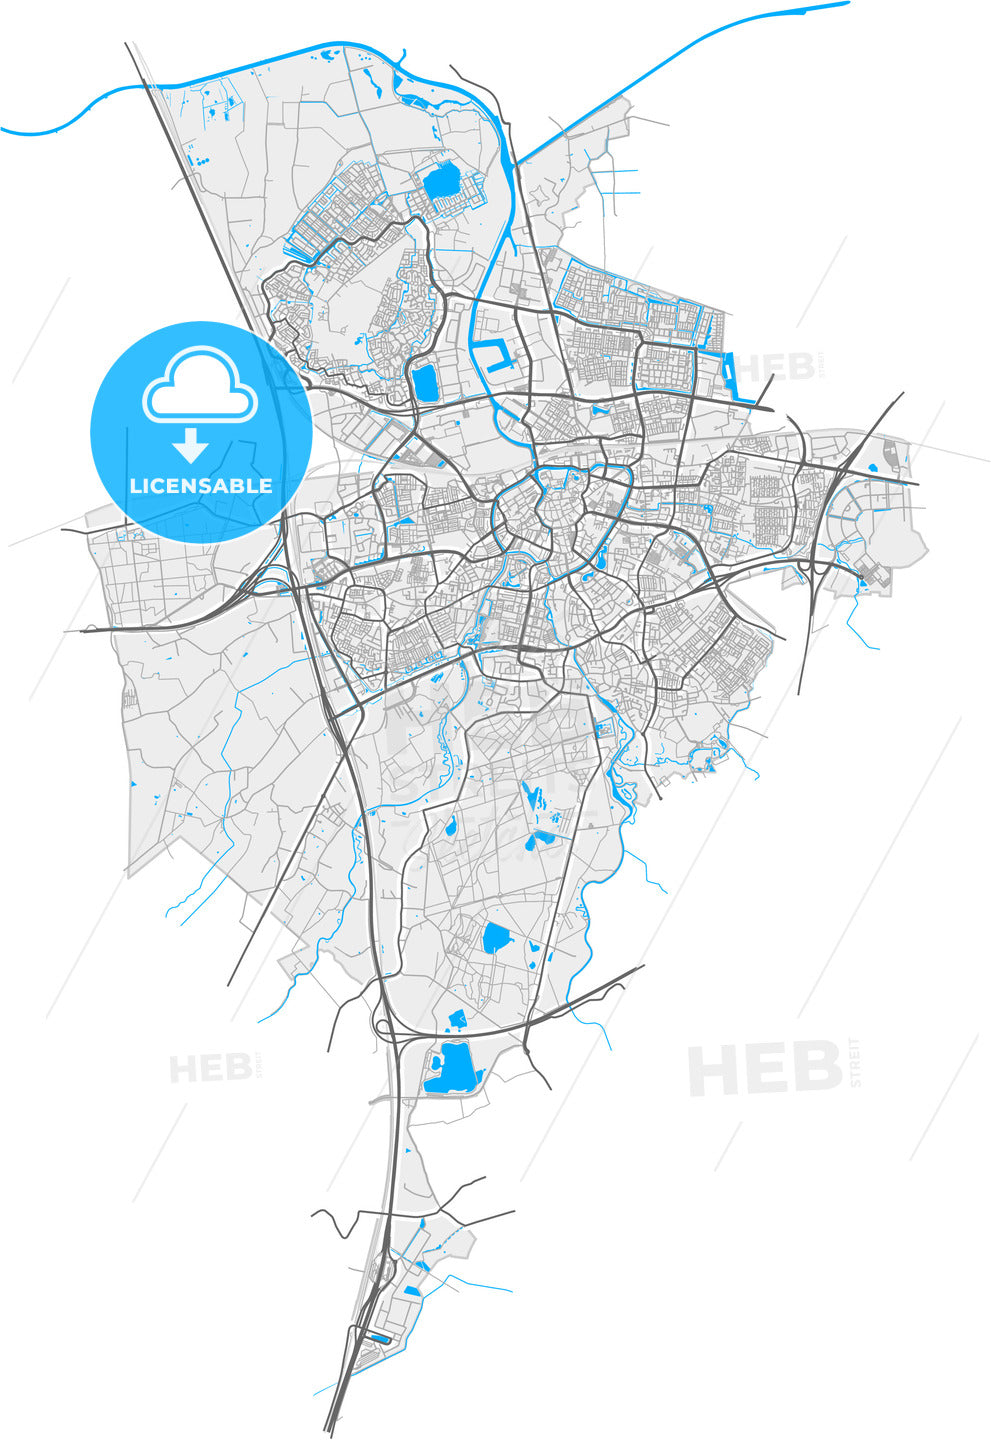 Breda, North Brabant, Netherlands, high quality vector map